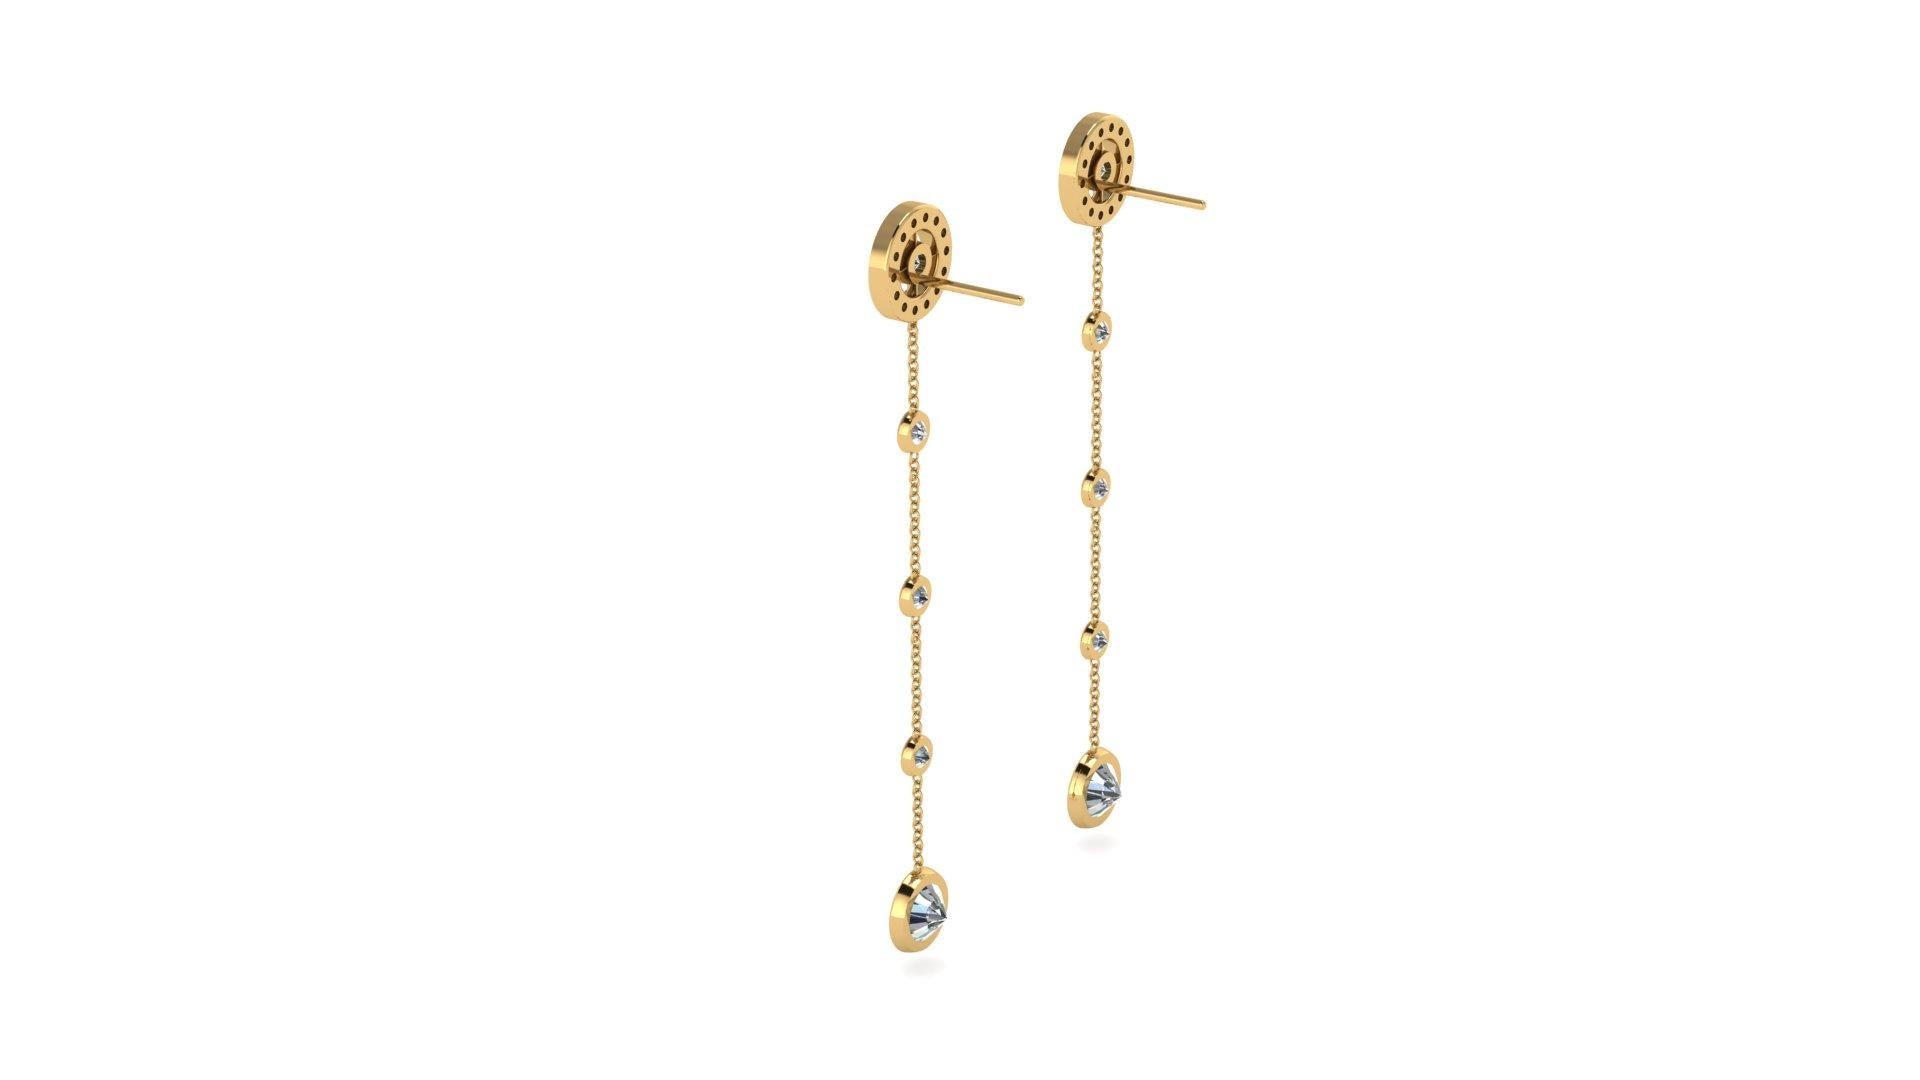 Round Cut 3.25 Carat Diamonds Dangling Earrings in 18k Gold For Sale